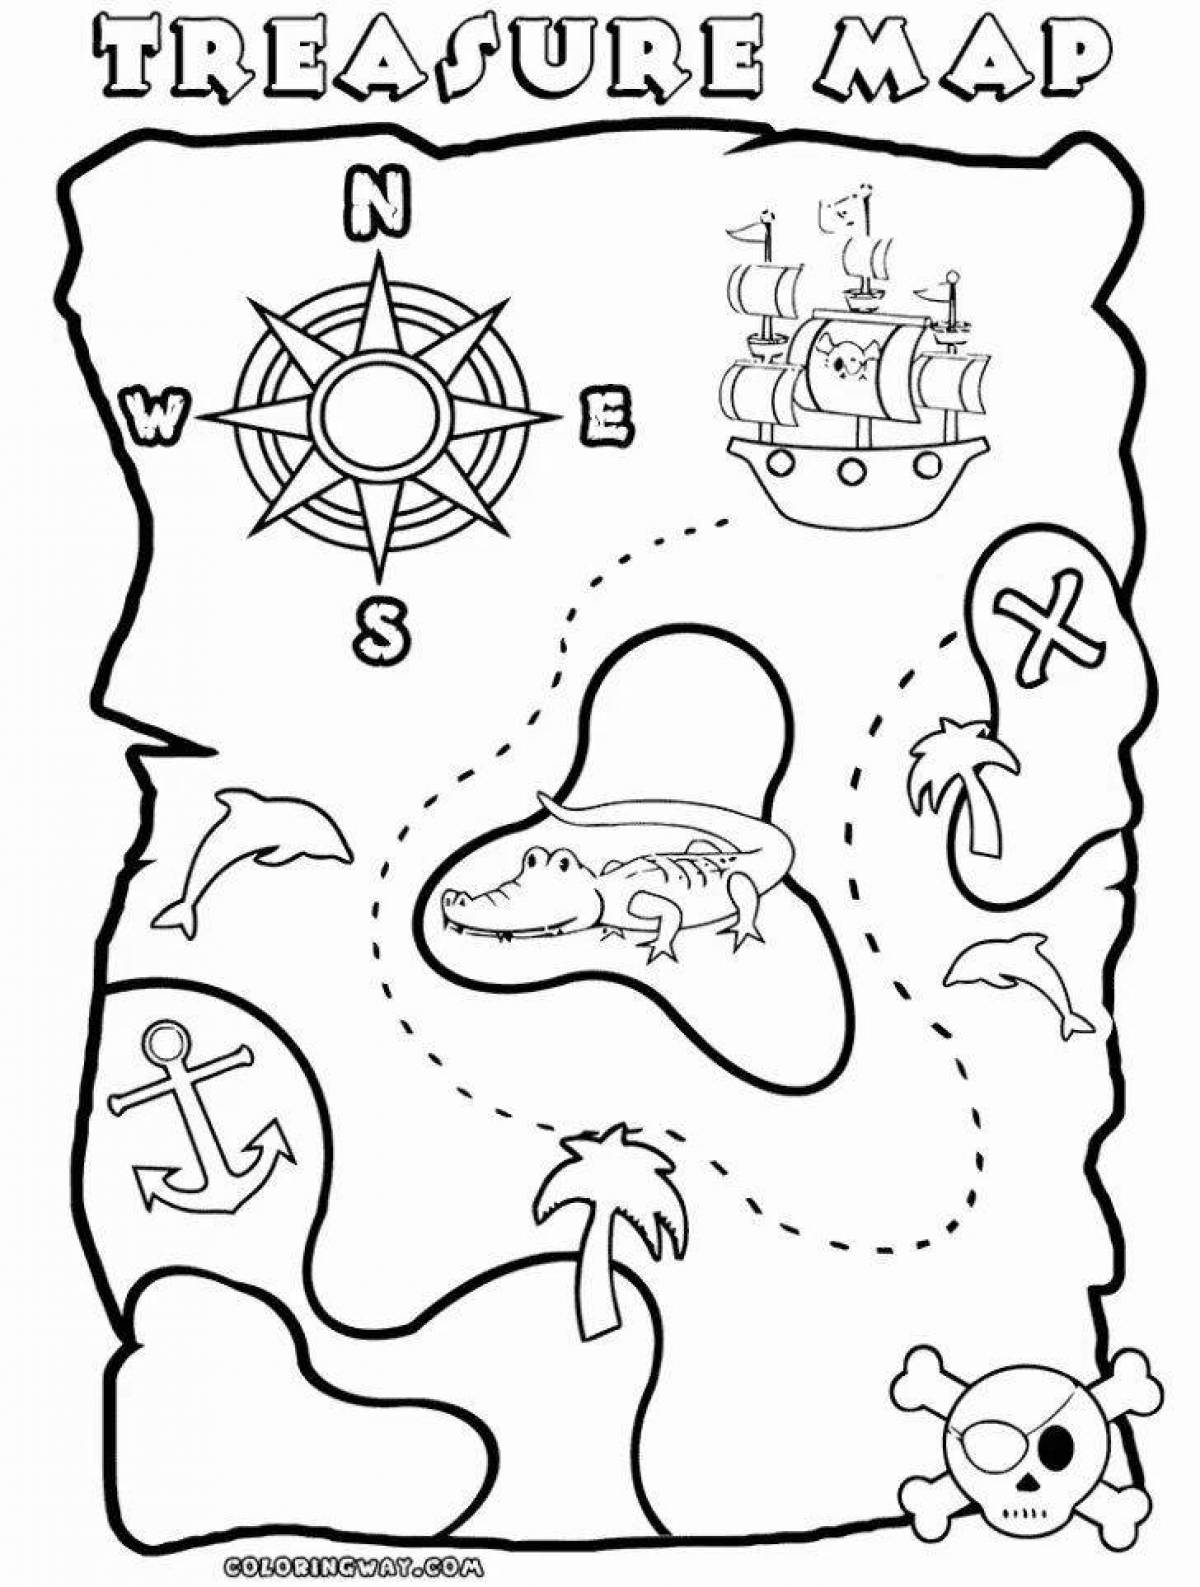 Pirate map fun coloring